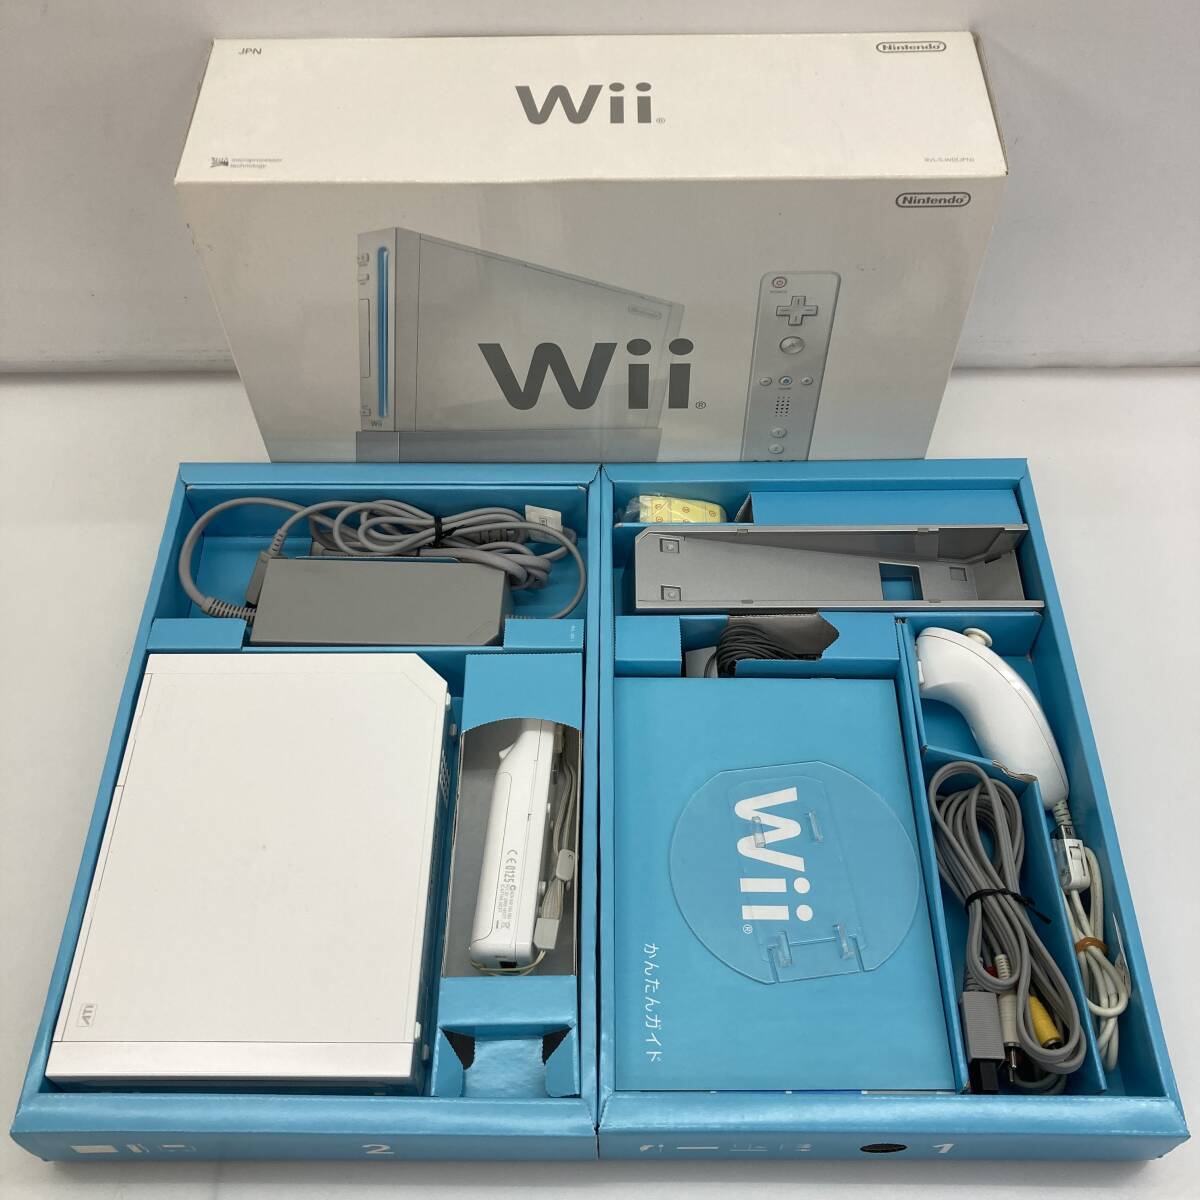 No.3630 *1 jpy ~ [ Junk Wii set ] Wii body remote control controller nn tea k peripherals junk 